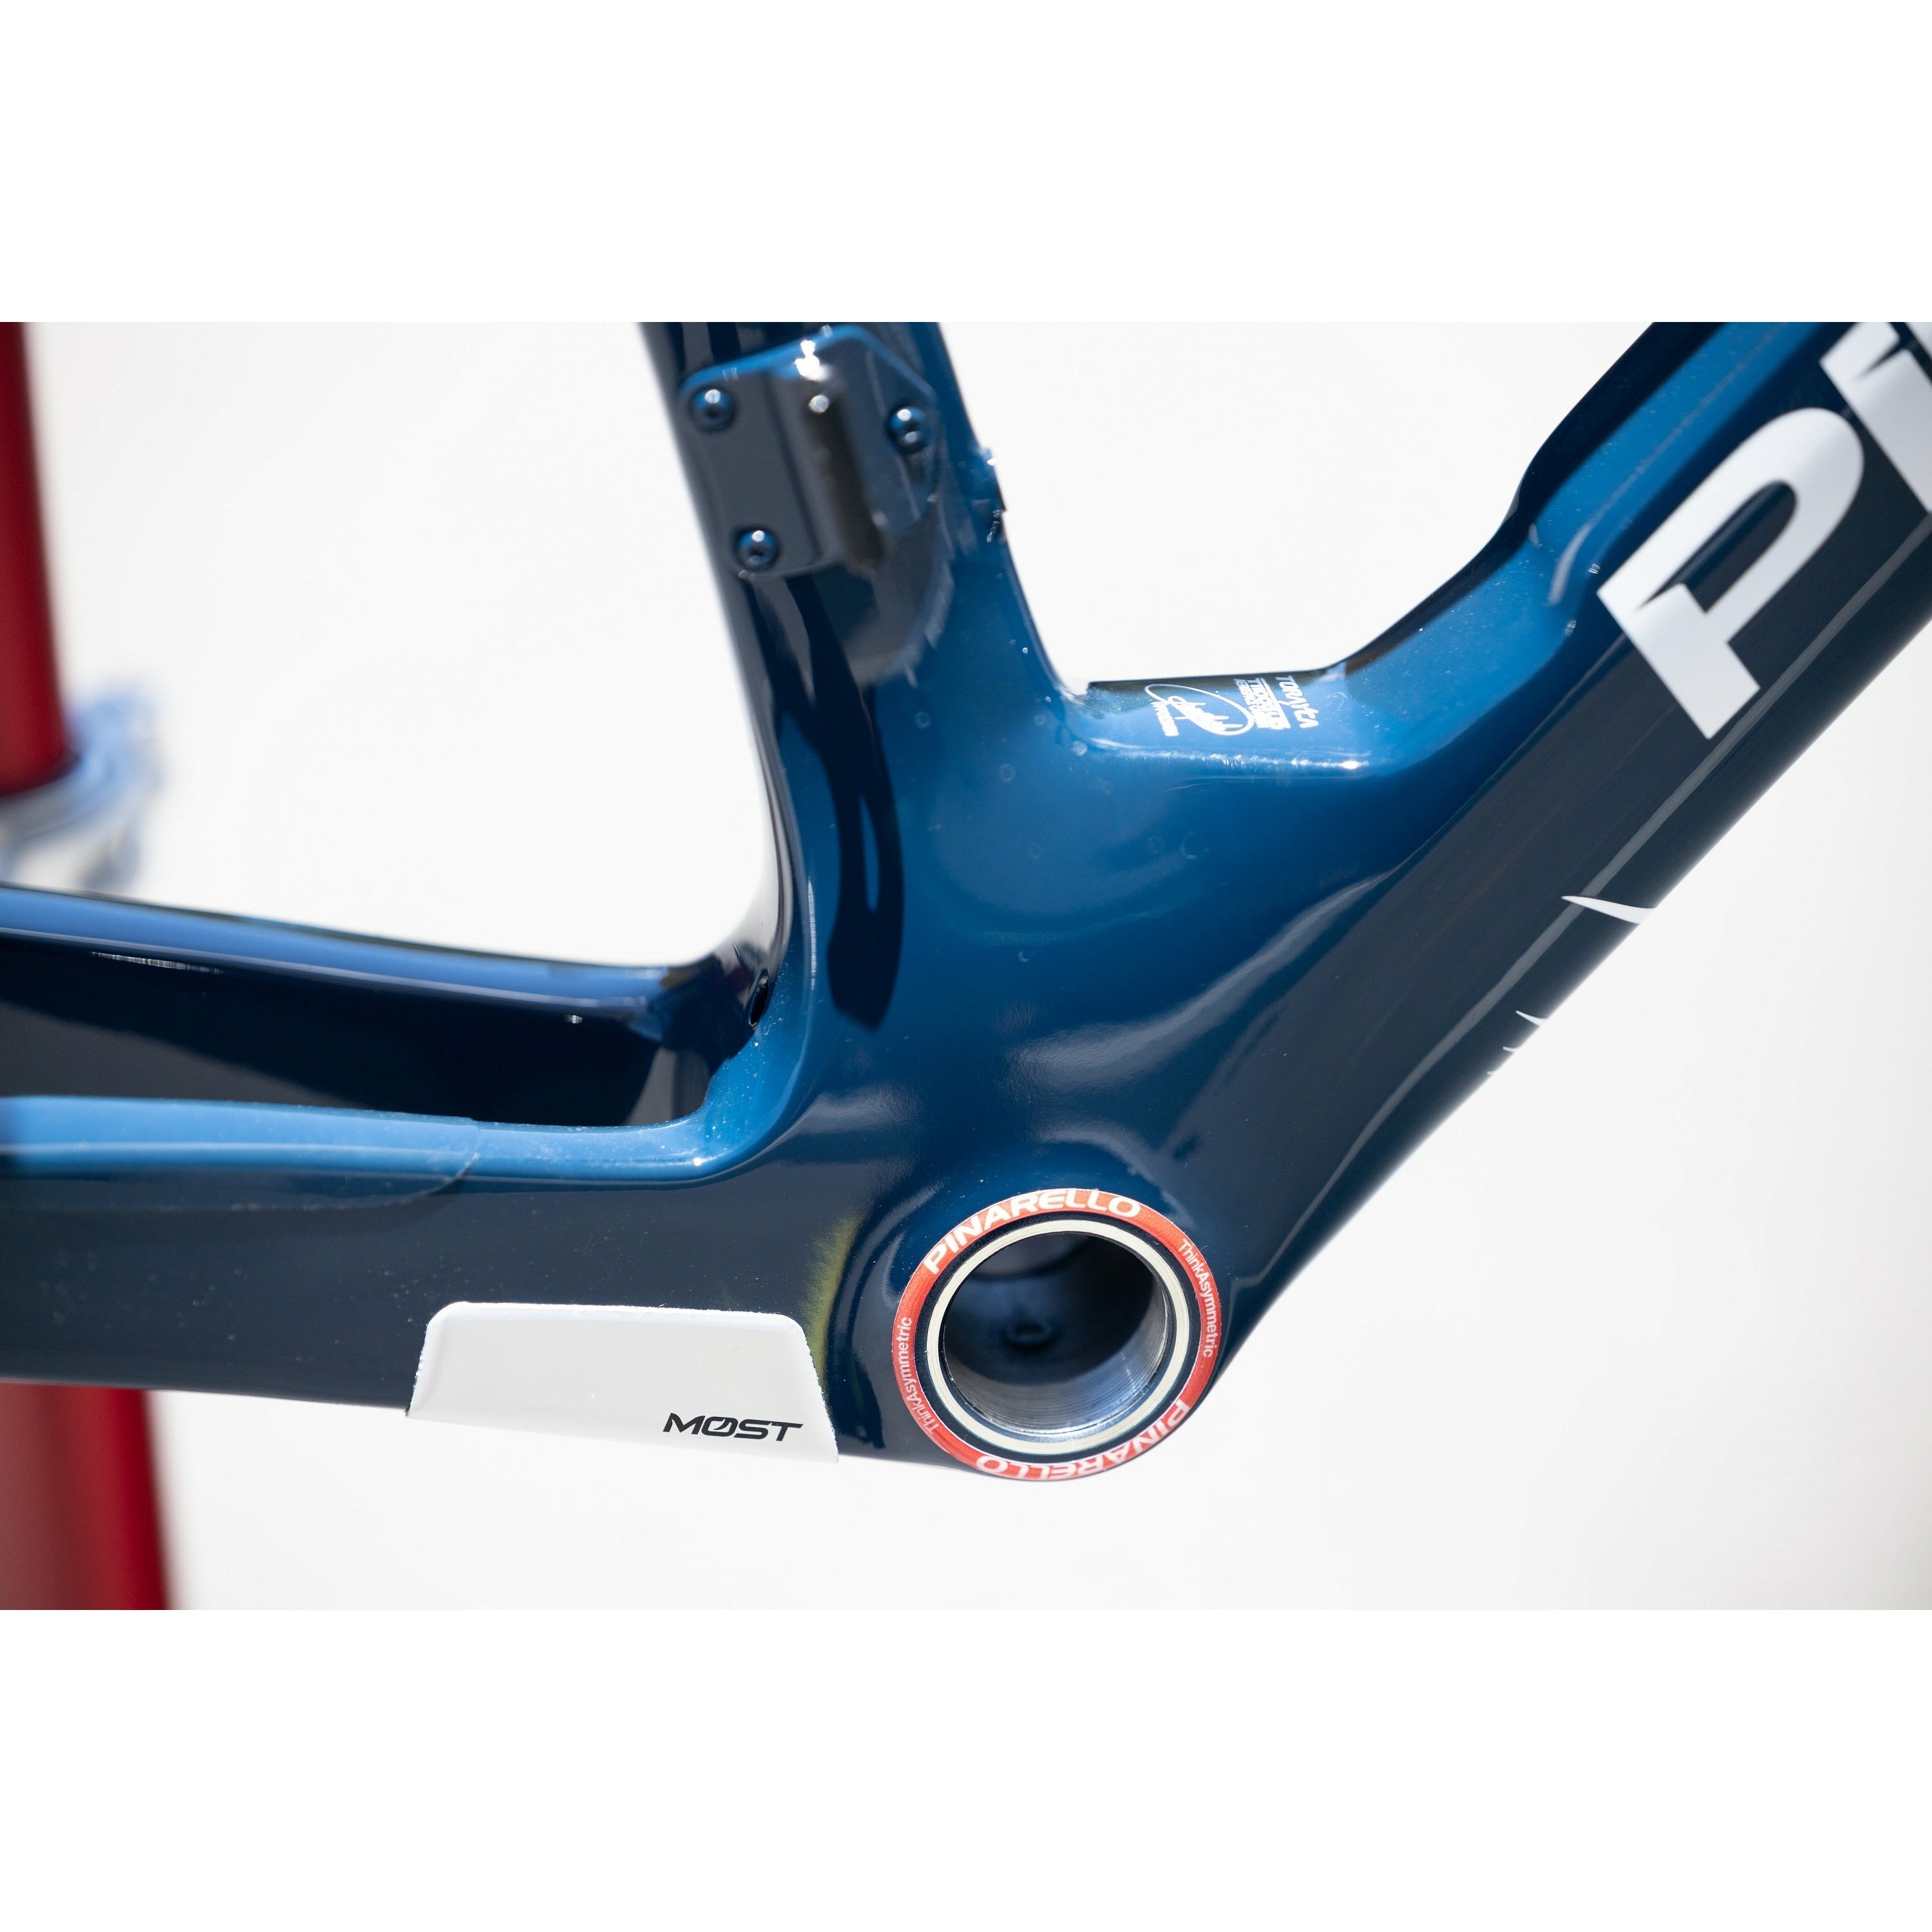 Pinarello Dogma F12 X-Light Official Team INEOS Grenadiers Road Bike Frameset- 57.5